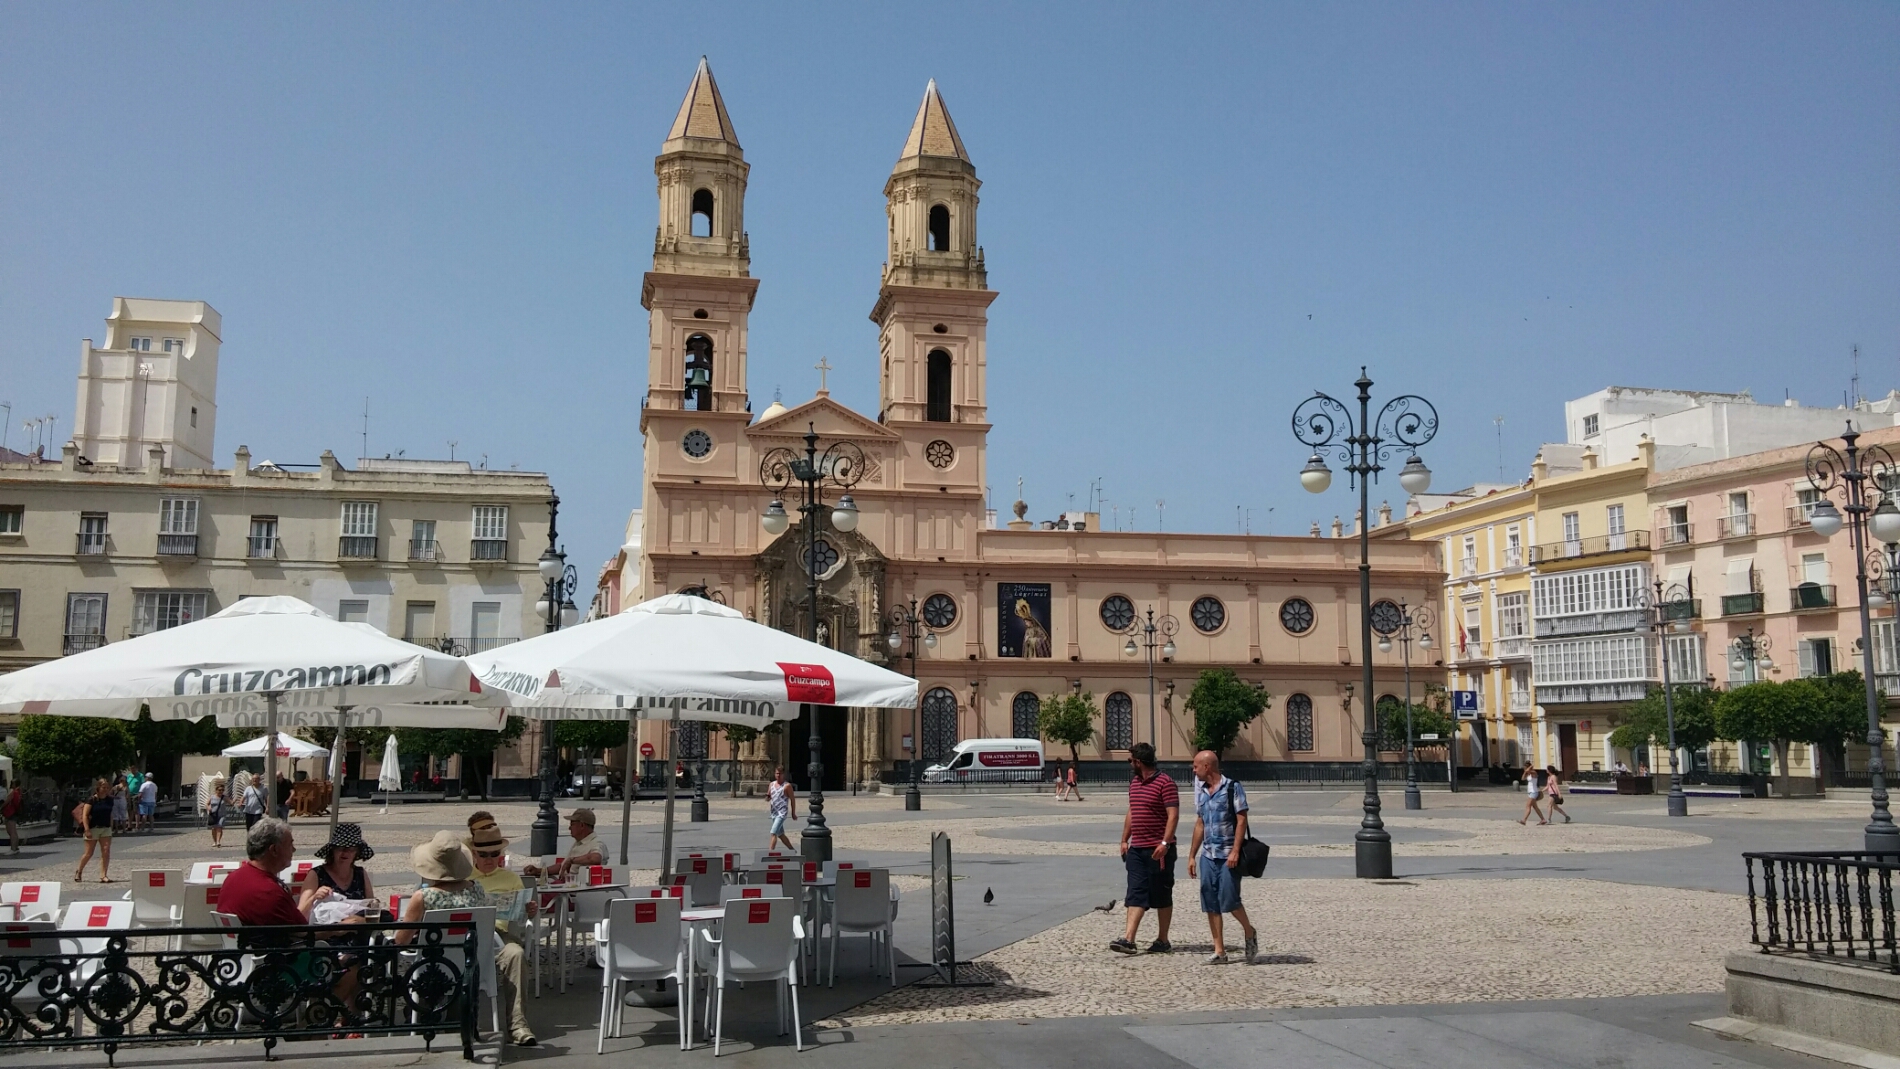 DAY 20 – Marina bound in Cadiz